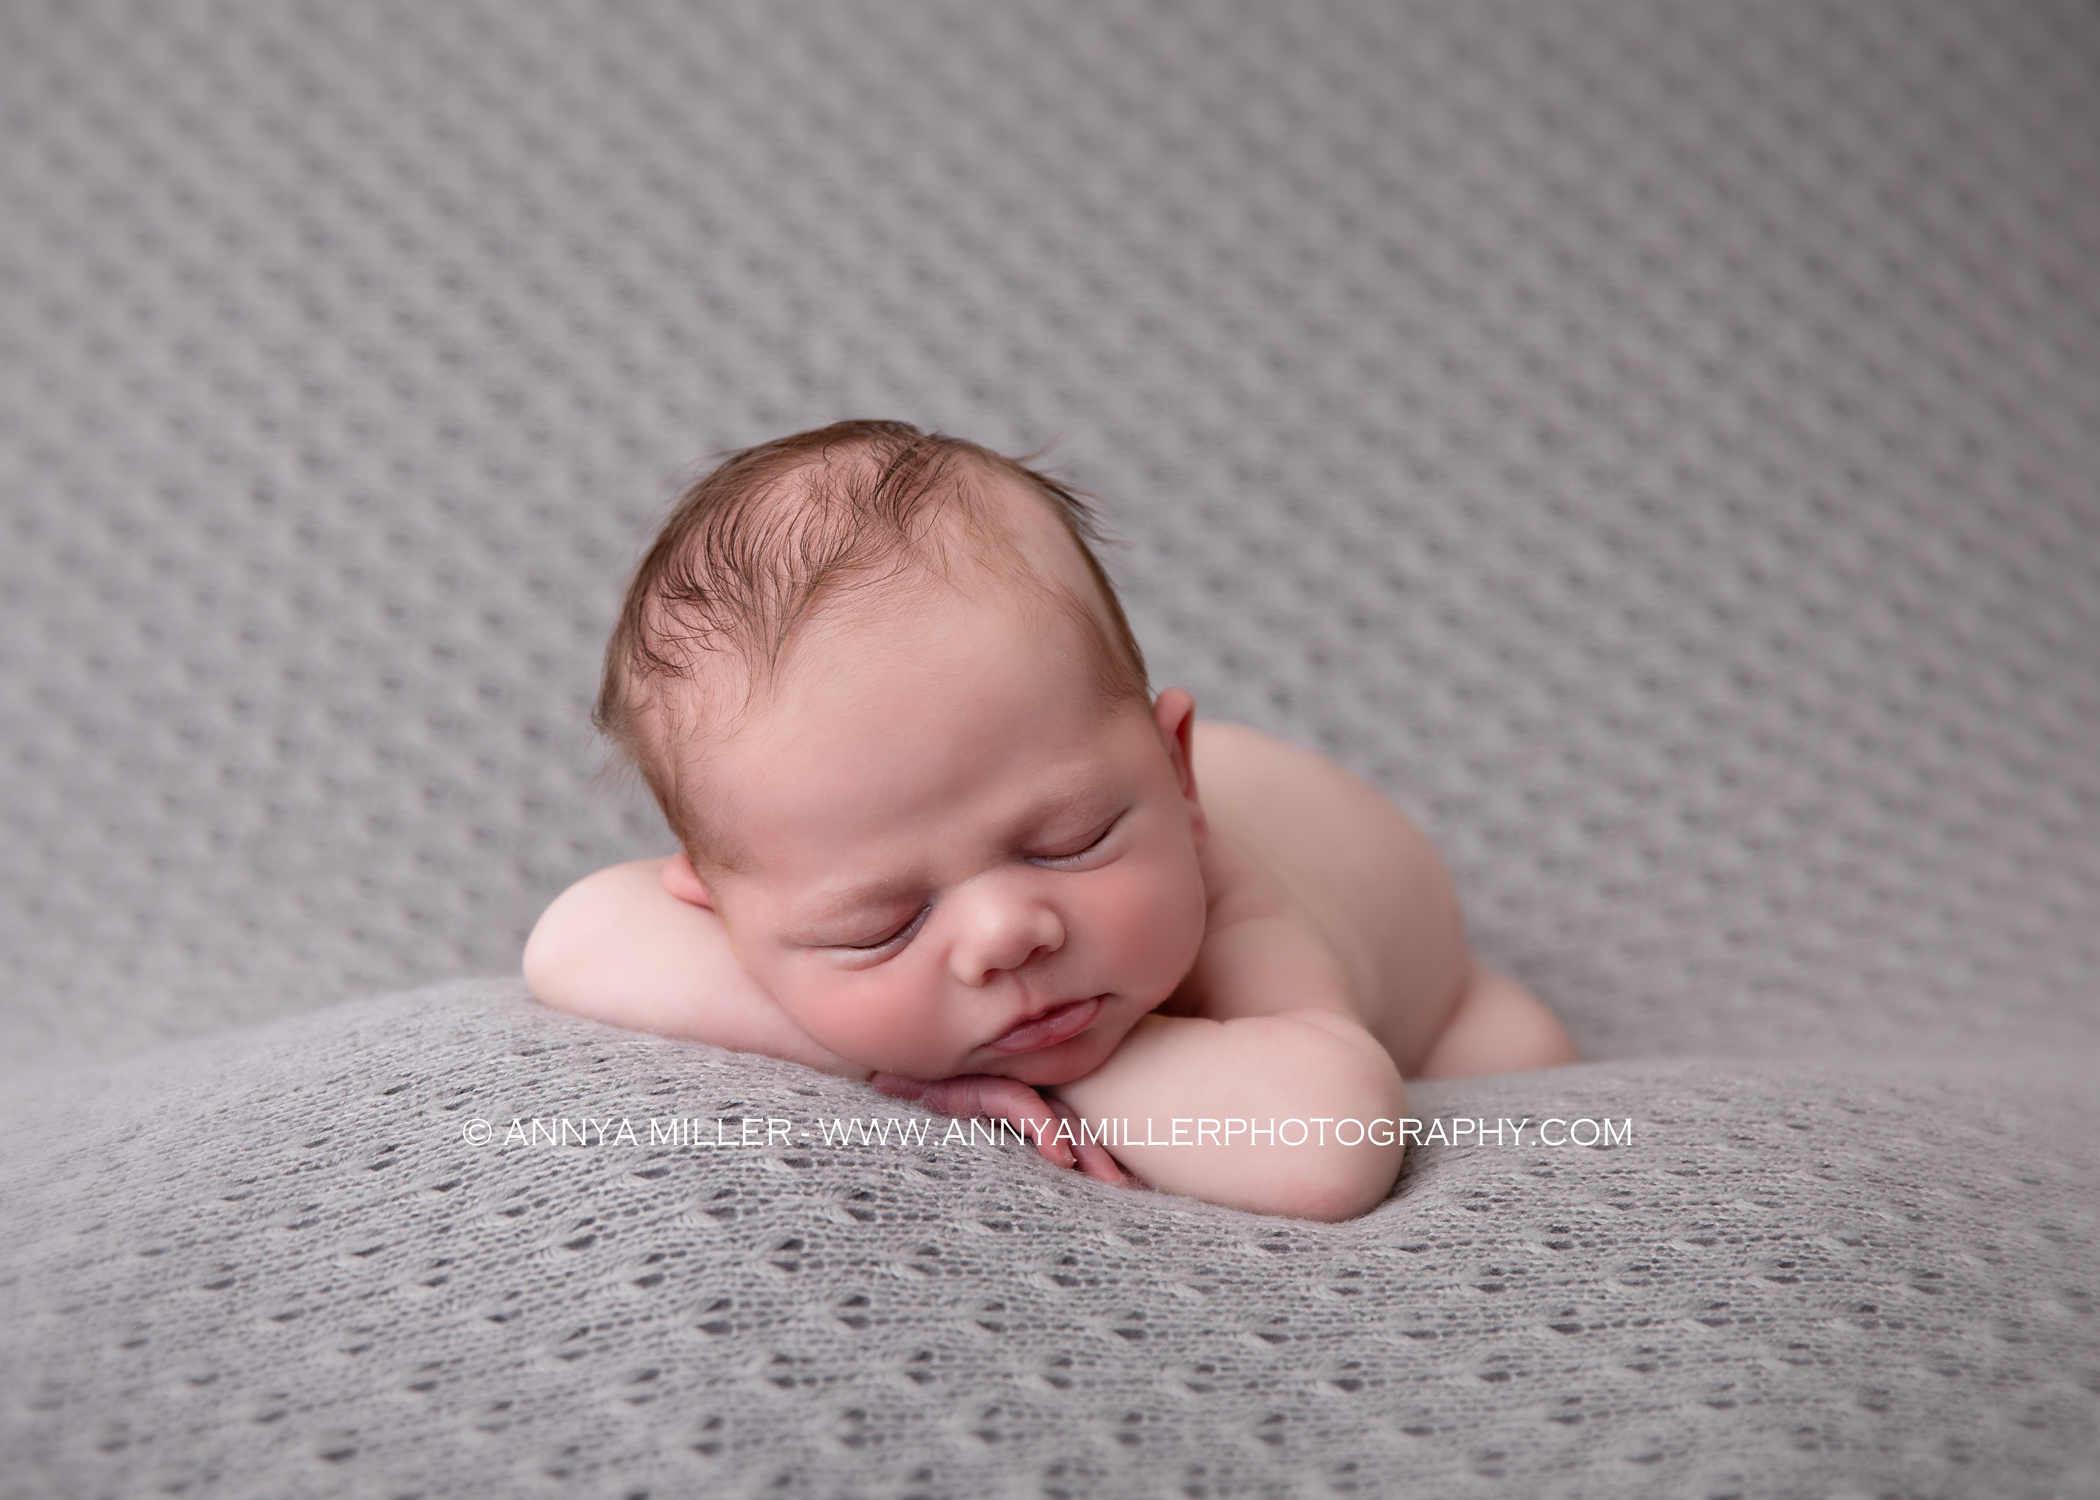 Portraits of baby boy by ajax newborn photographer Annya miller 